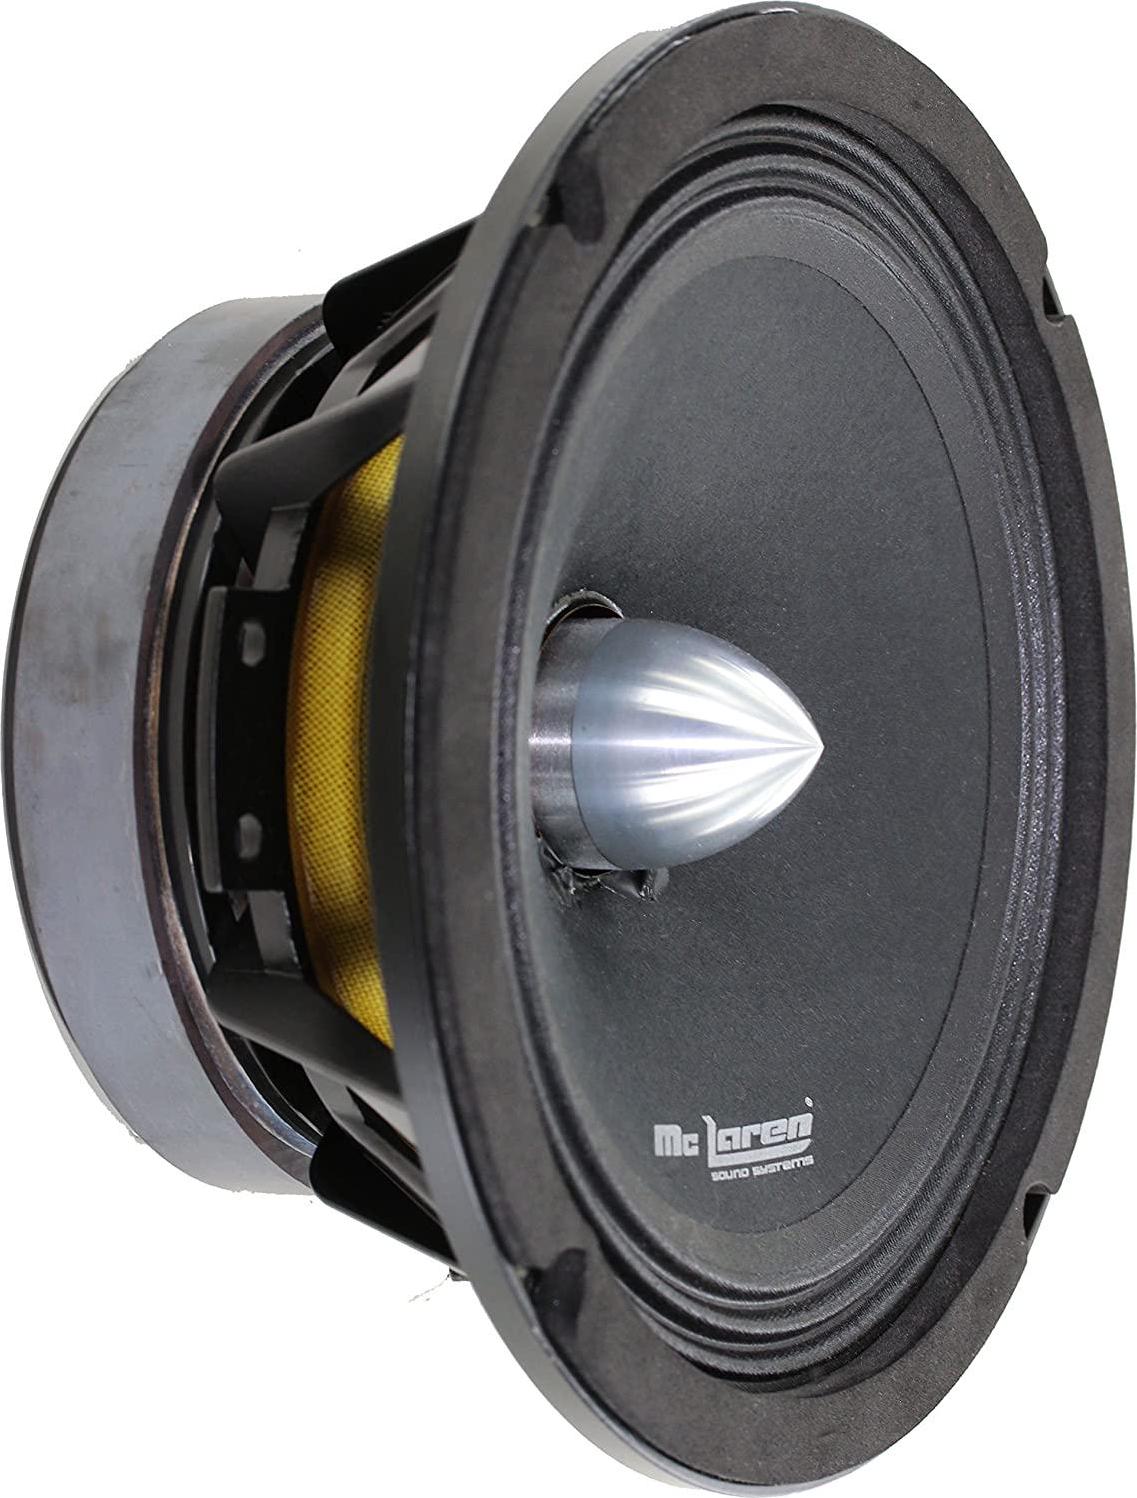 MC LAREN SOUND SYSTEMS, MCLAREN Audio MLM880 8 Midrange Car Speaker, 1.5 Vc, 350W Max